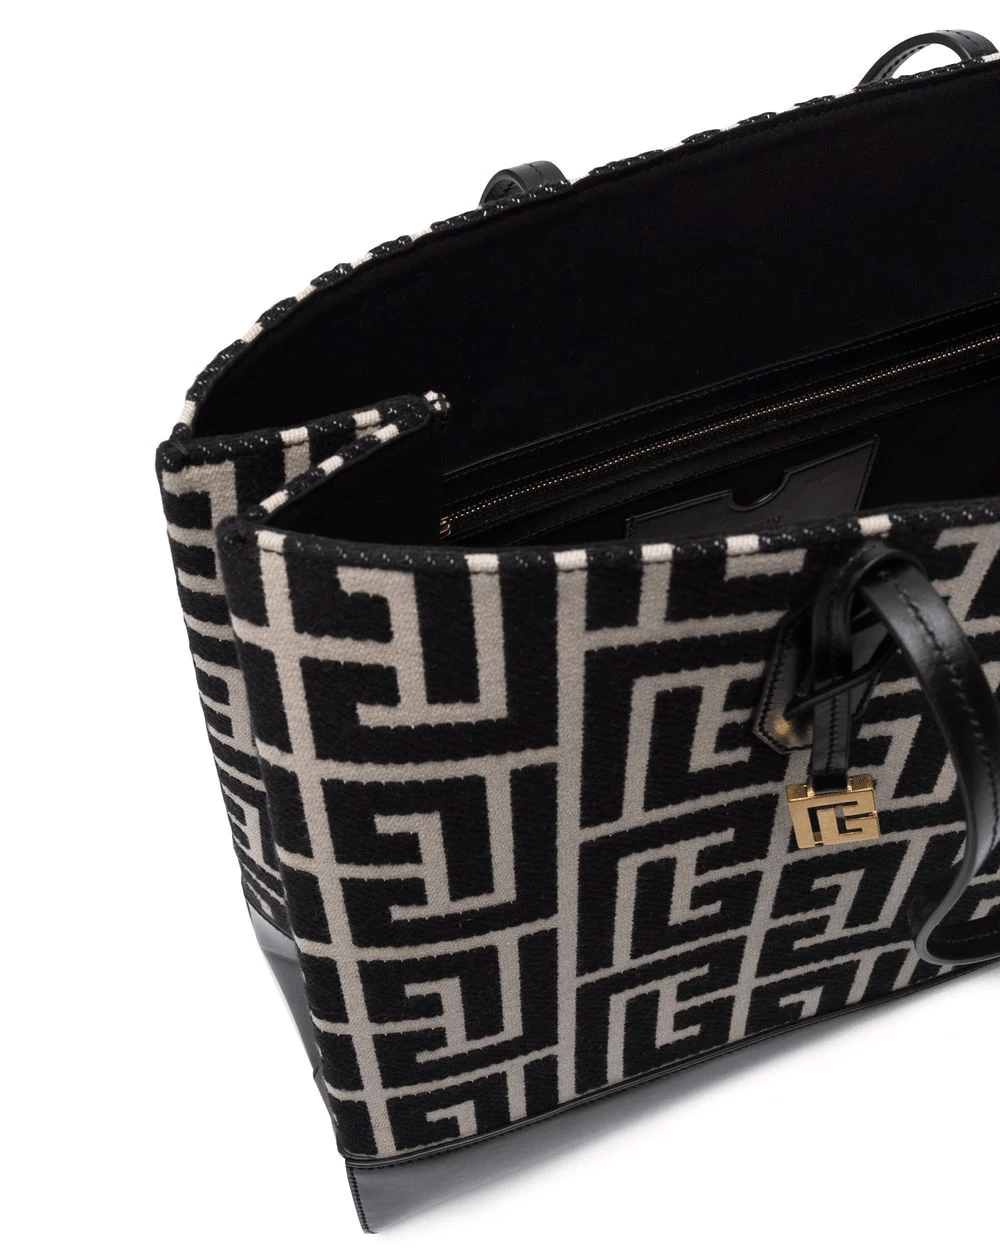 Monogram Folded Shopping Bag in Ivory and Black